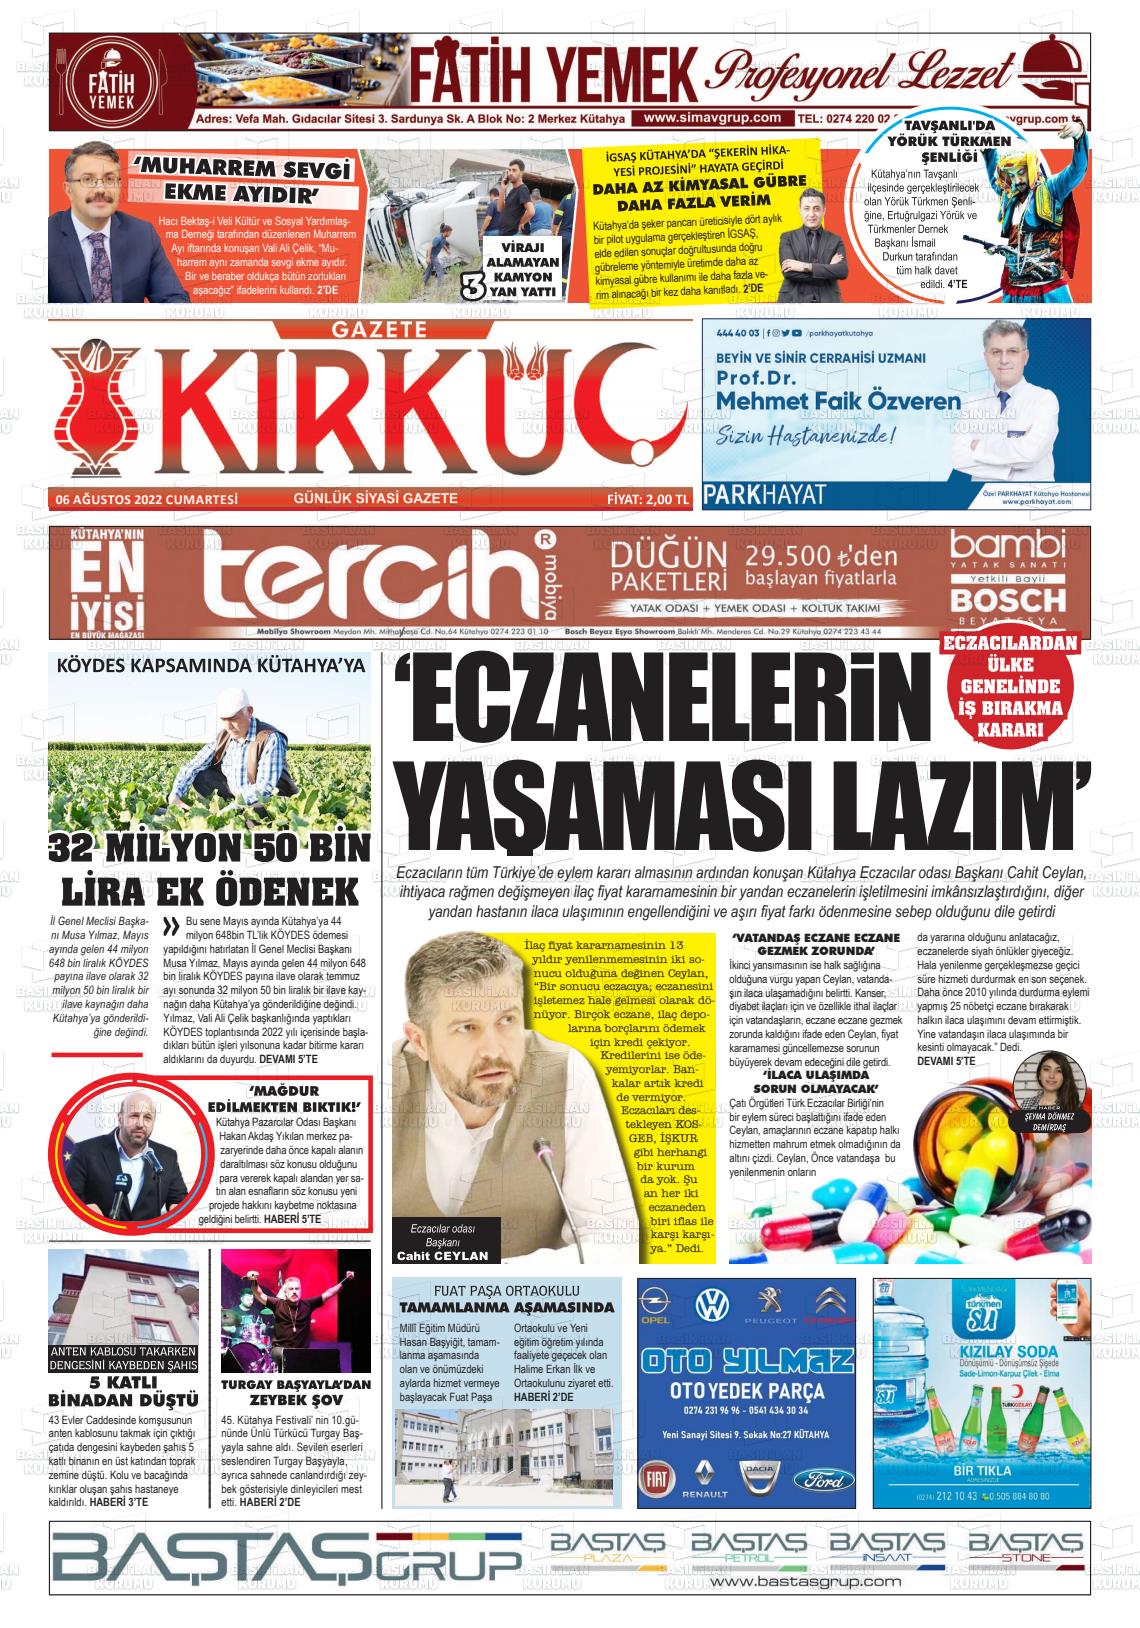 06 Ağustos 2022 Gazete Kırküç Gazete Manşeti